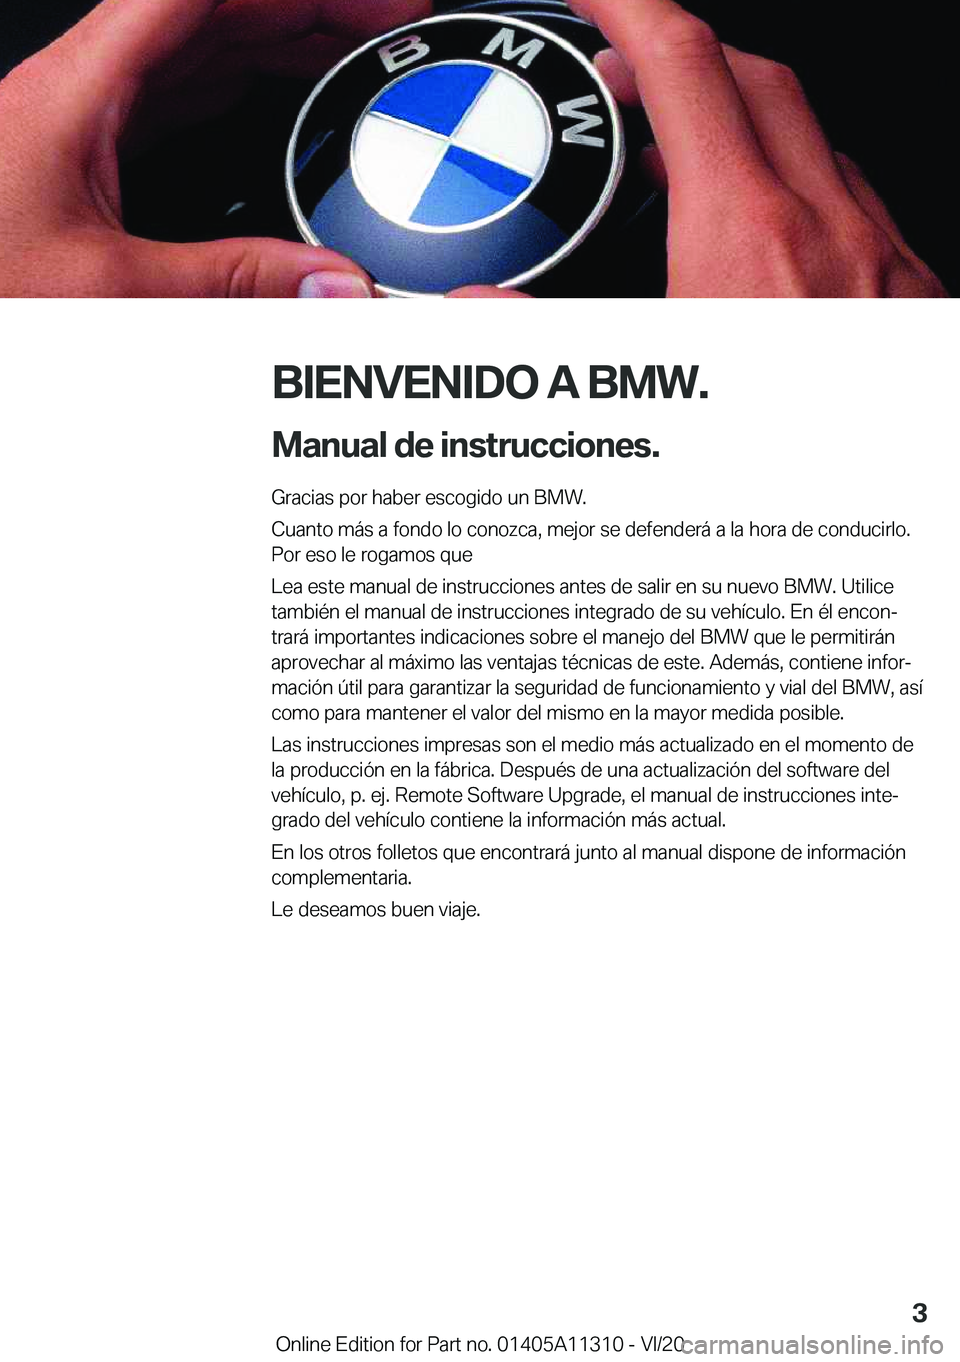 BMW 5 SERIES 2021  Manuales de Empleo (in Spanish) �B�I�E�N�V�E�N�I�D�O��A��B�M�W�.
�M�a�n�u�a�l��d�e��i�n�s�t�r�u�c�c�i�o�n�e�s�. �G�r�a�c�i�a�s��p�o�r��h�a�b�e�r��e�s�c�o�g�i�d�o��u�n��B�M�W�.
�C�u�a�n�t�o��m�